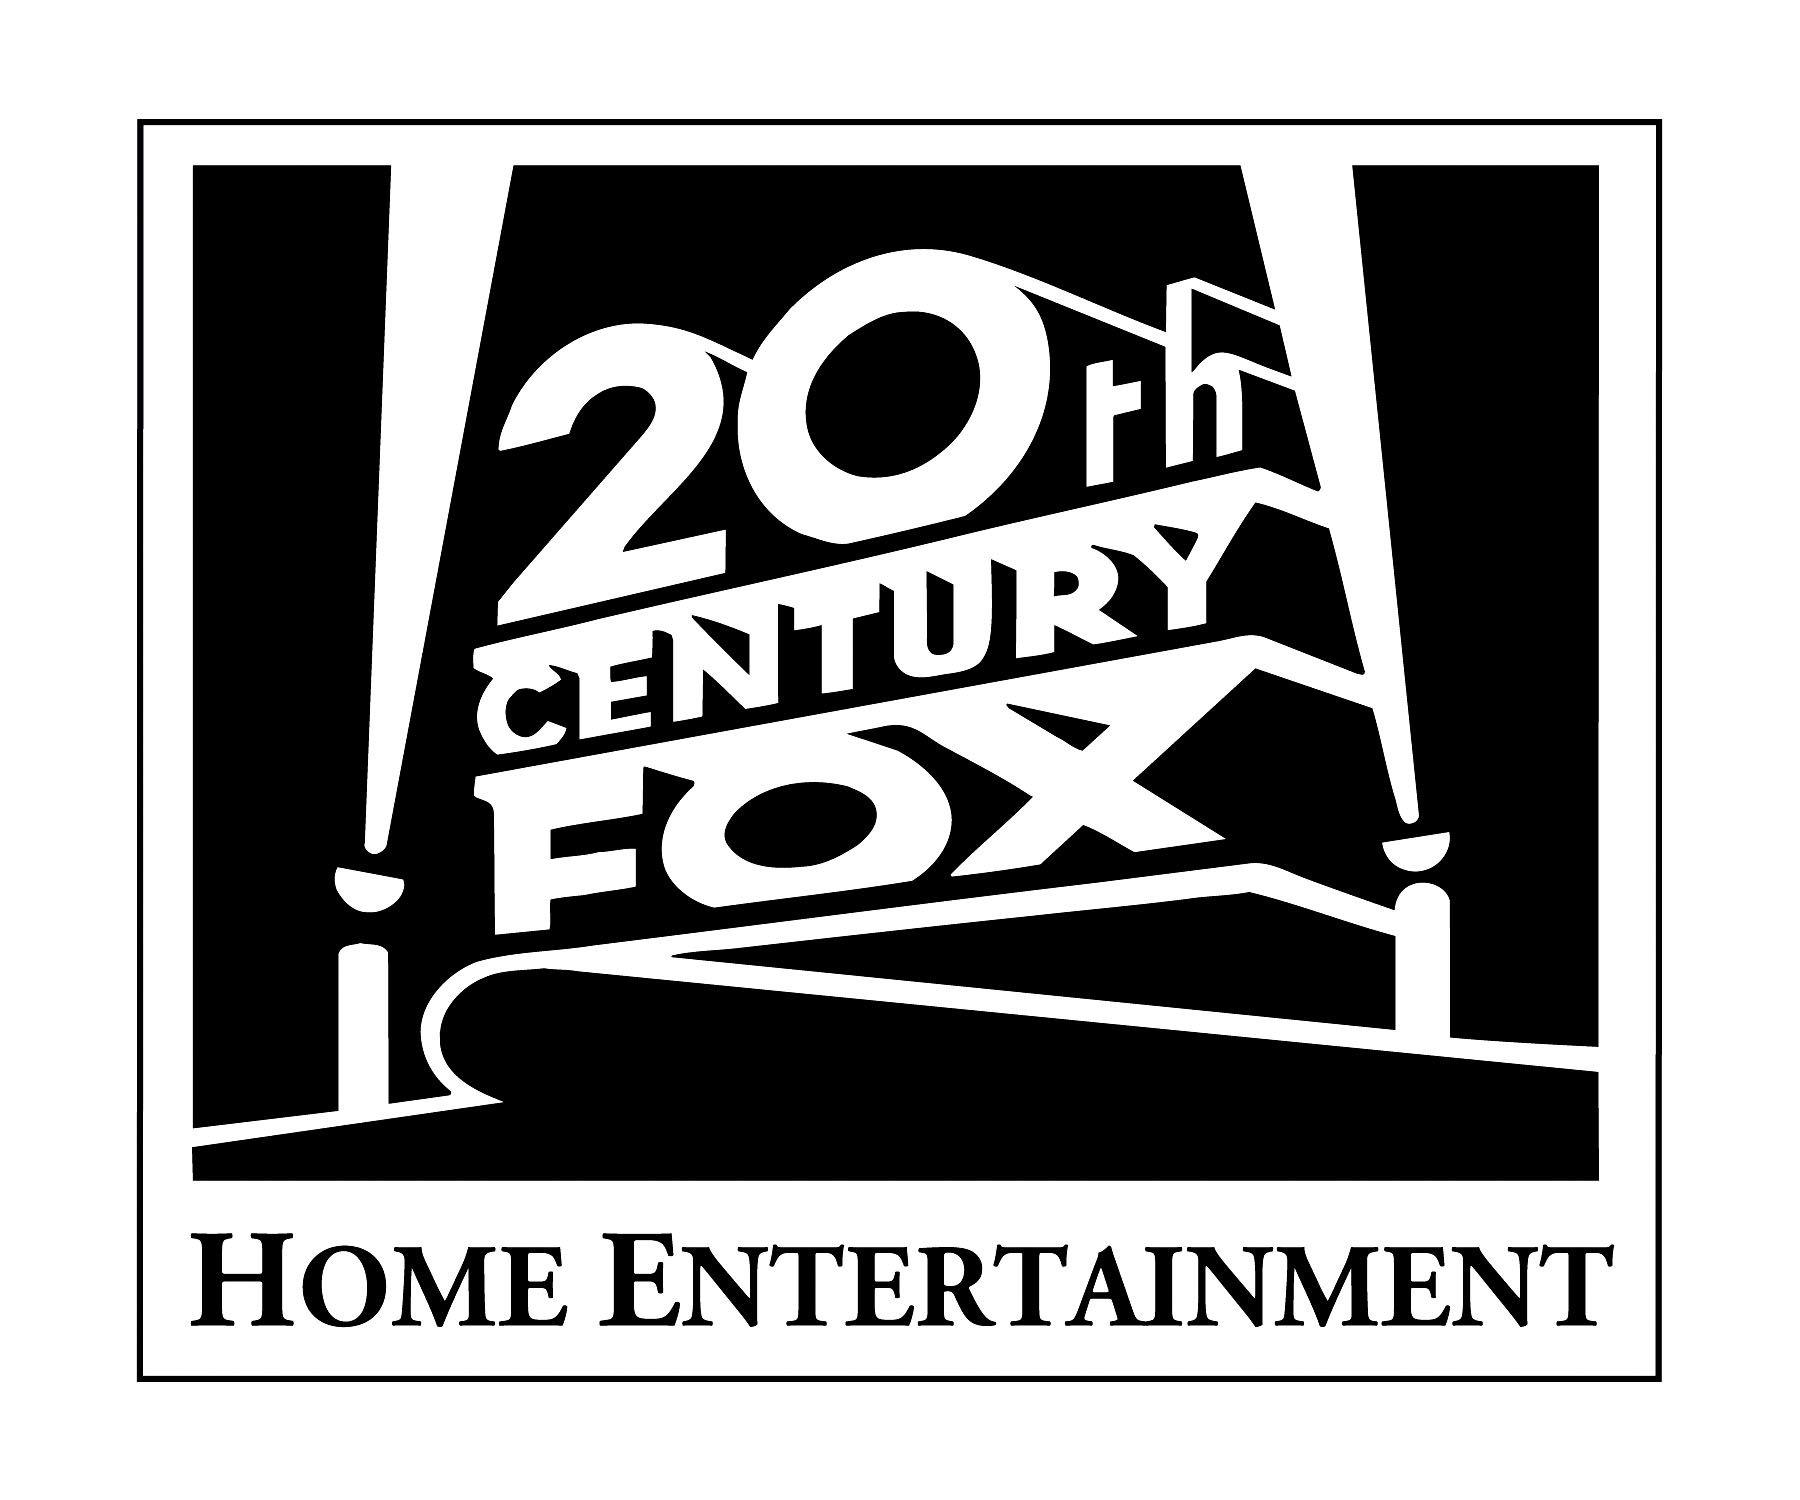 Home Entertainment Logo - Twentieth Century Fox Film Corporation image 20th Century Fox Home